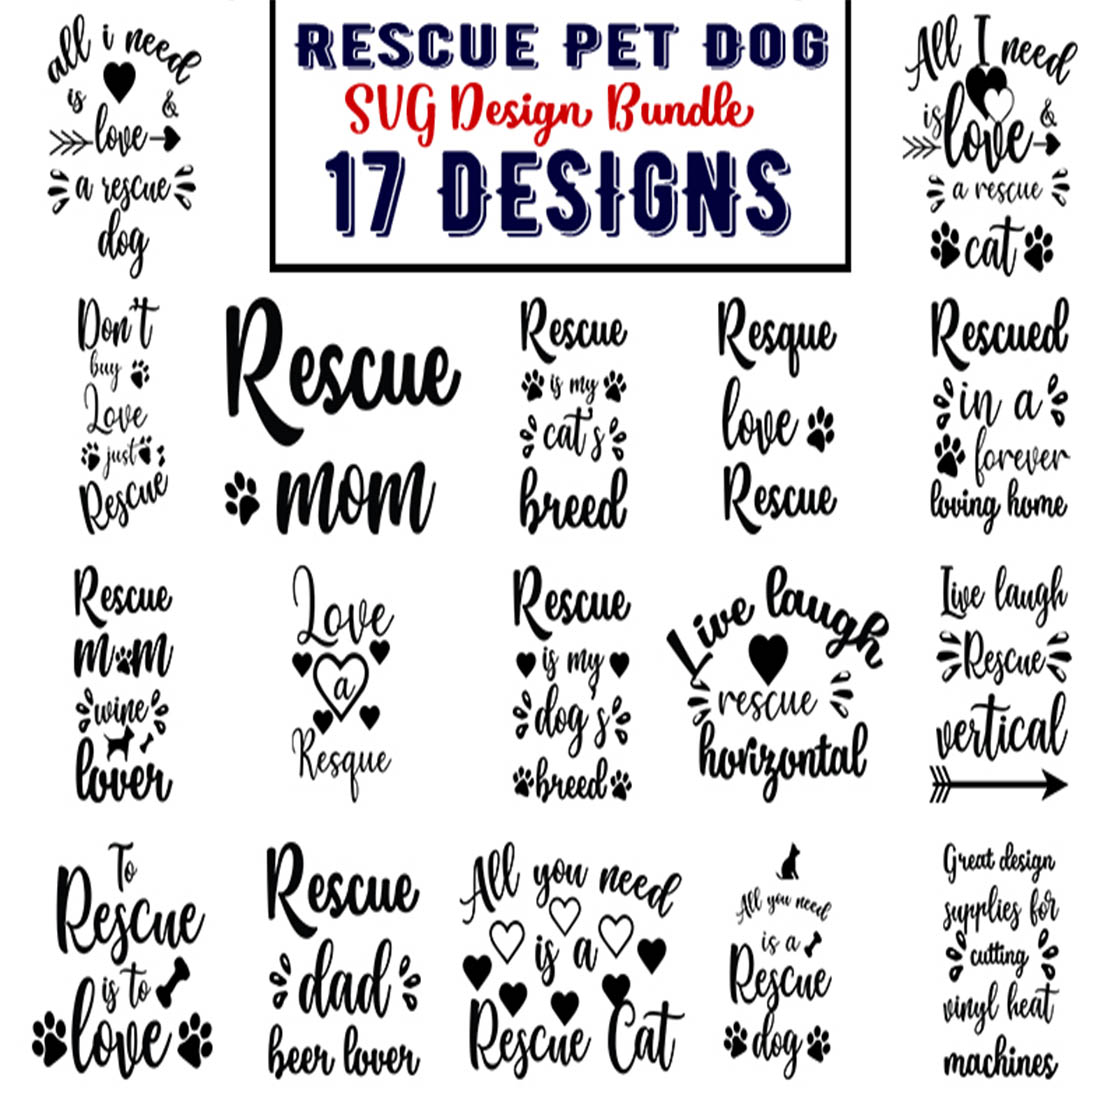 Rescue Pet Dog Svg Bundle cover image.